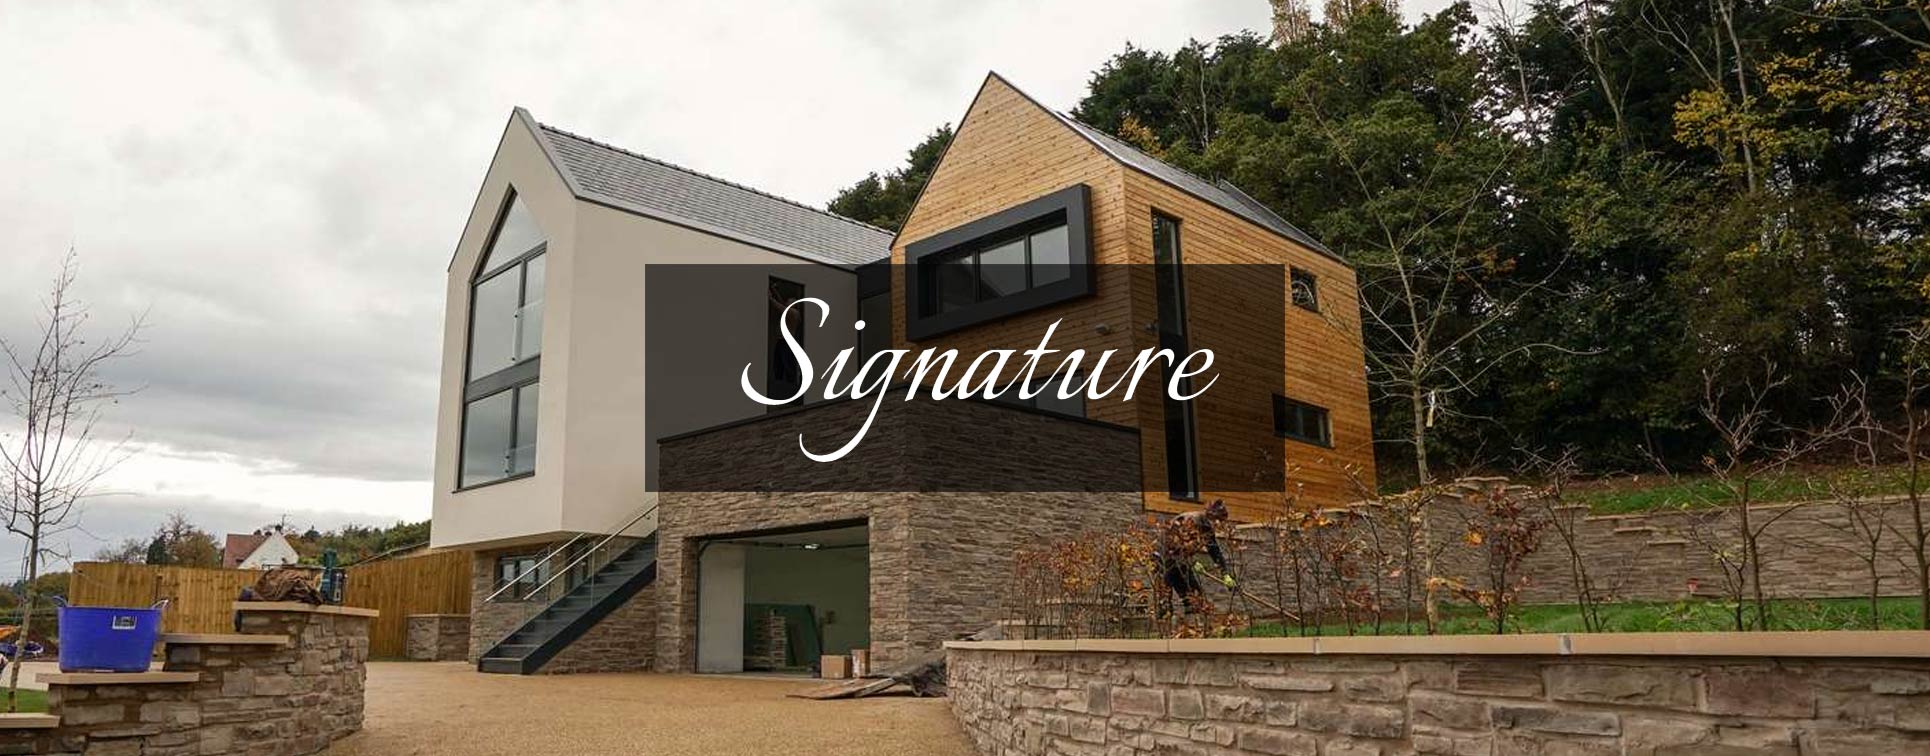 Signature aluminium windows installed throughout this new build property Cheshire, UK.